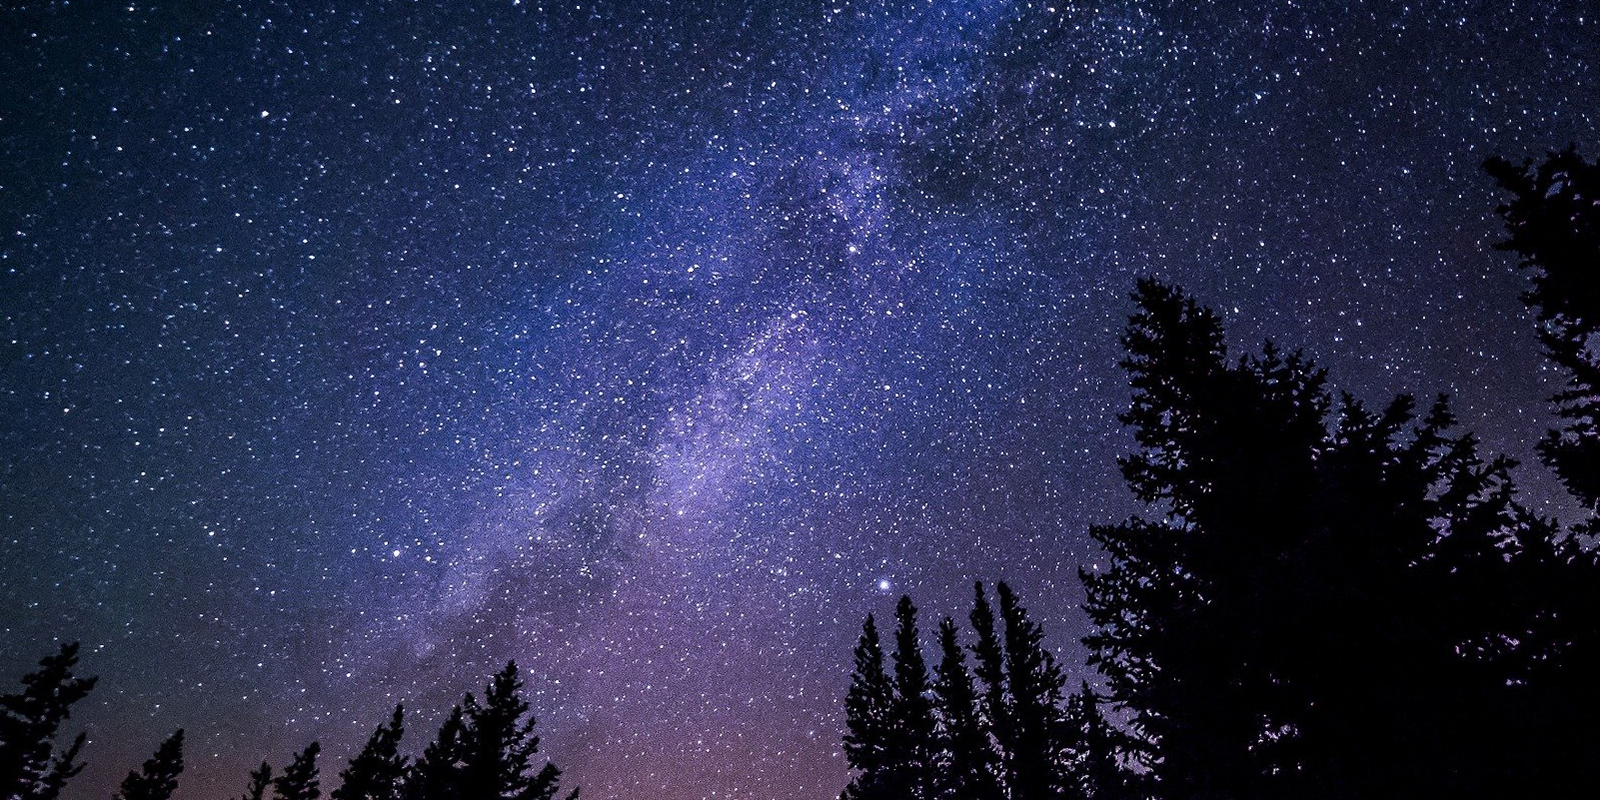 Image of night sky and milky way galaxy.